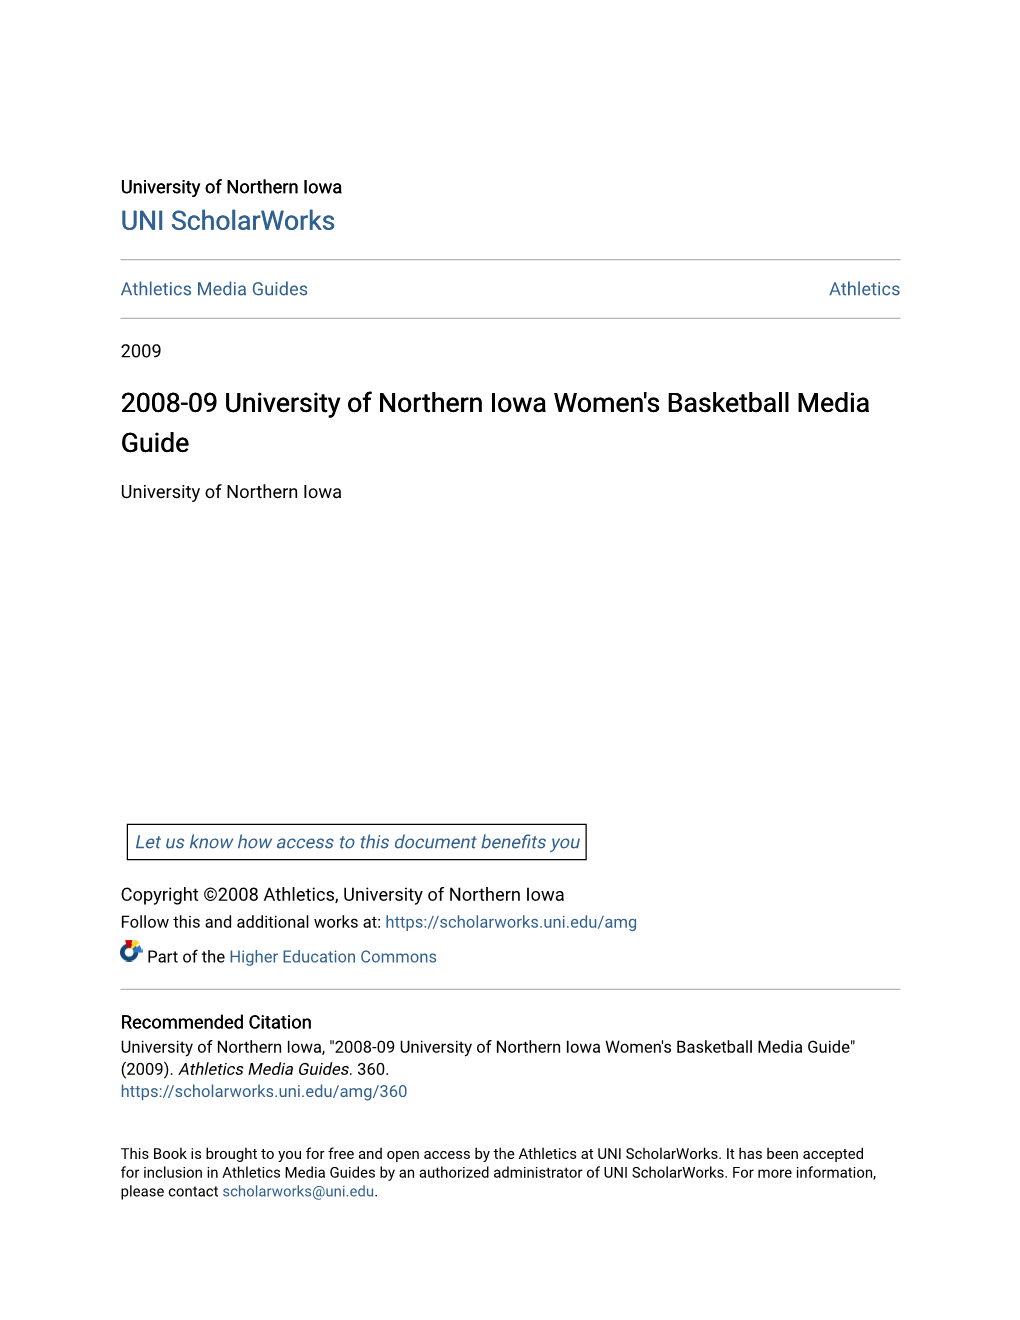 2008-09 University of Northern Iowa Women's Basketball Media Guide